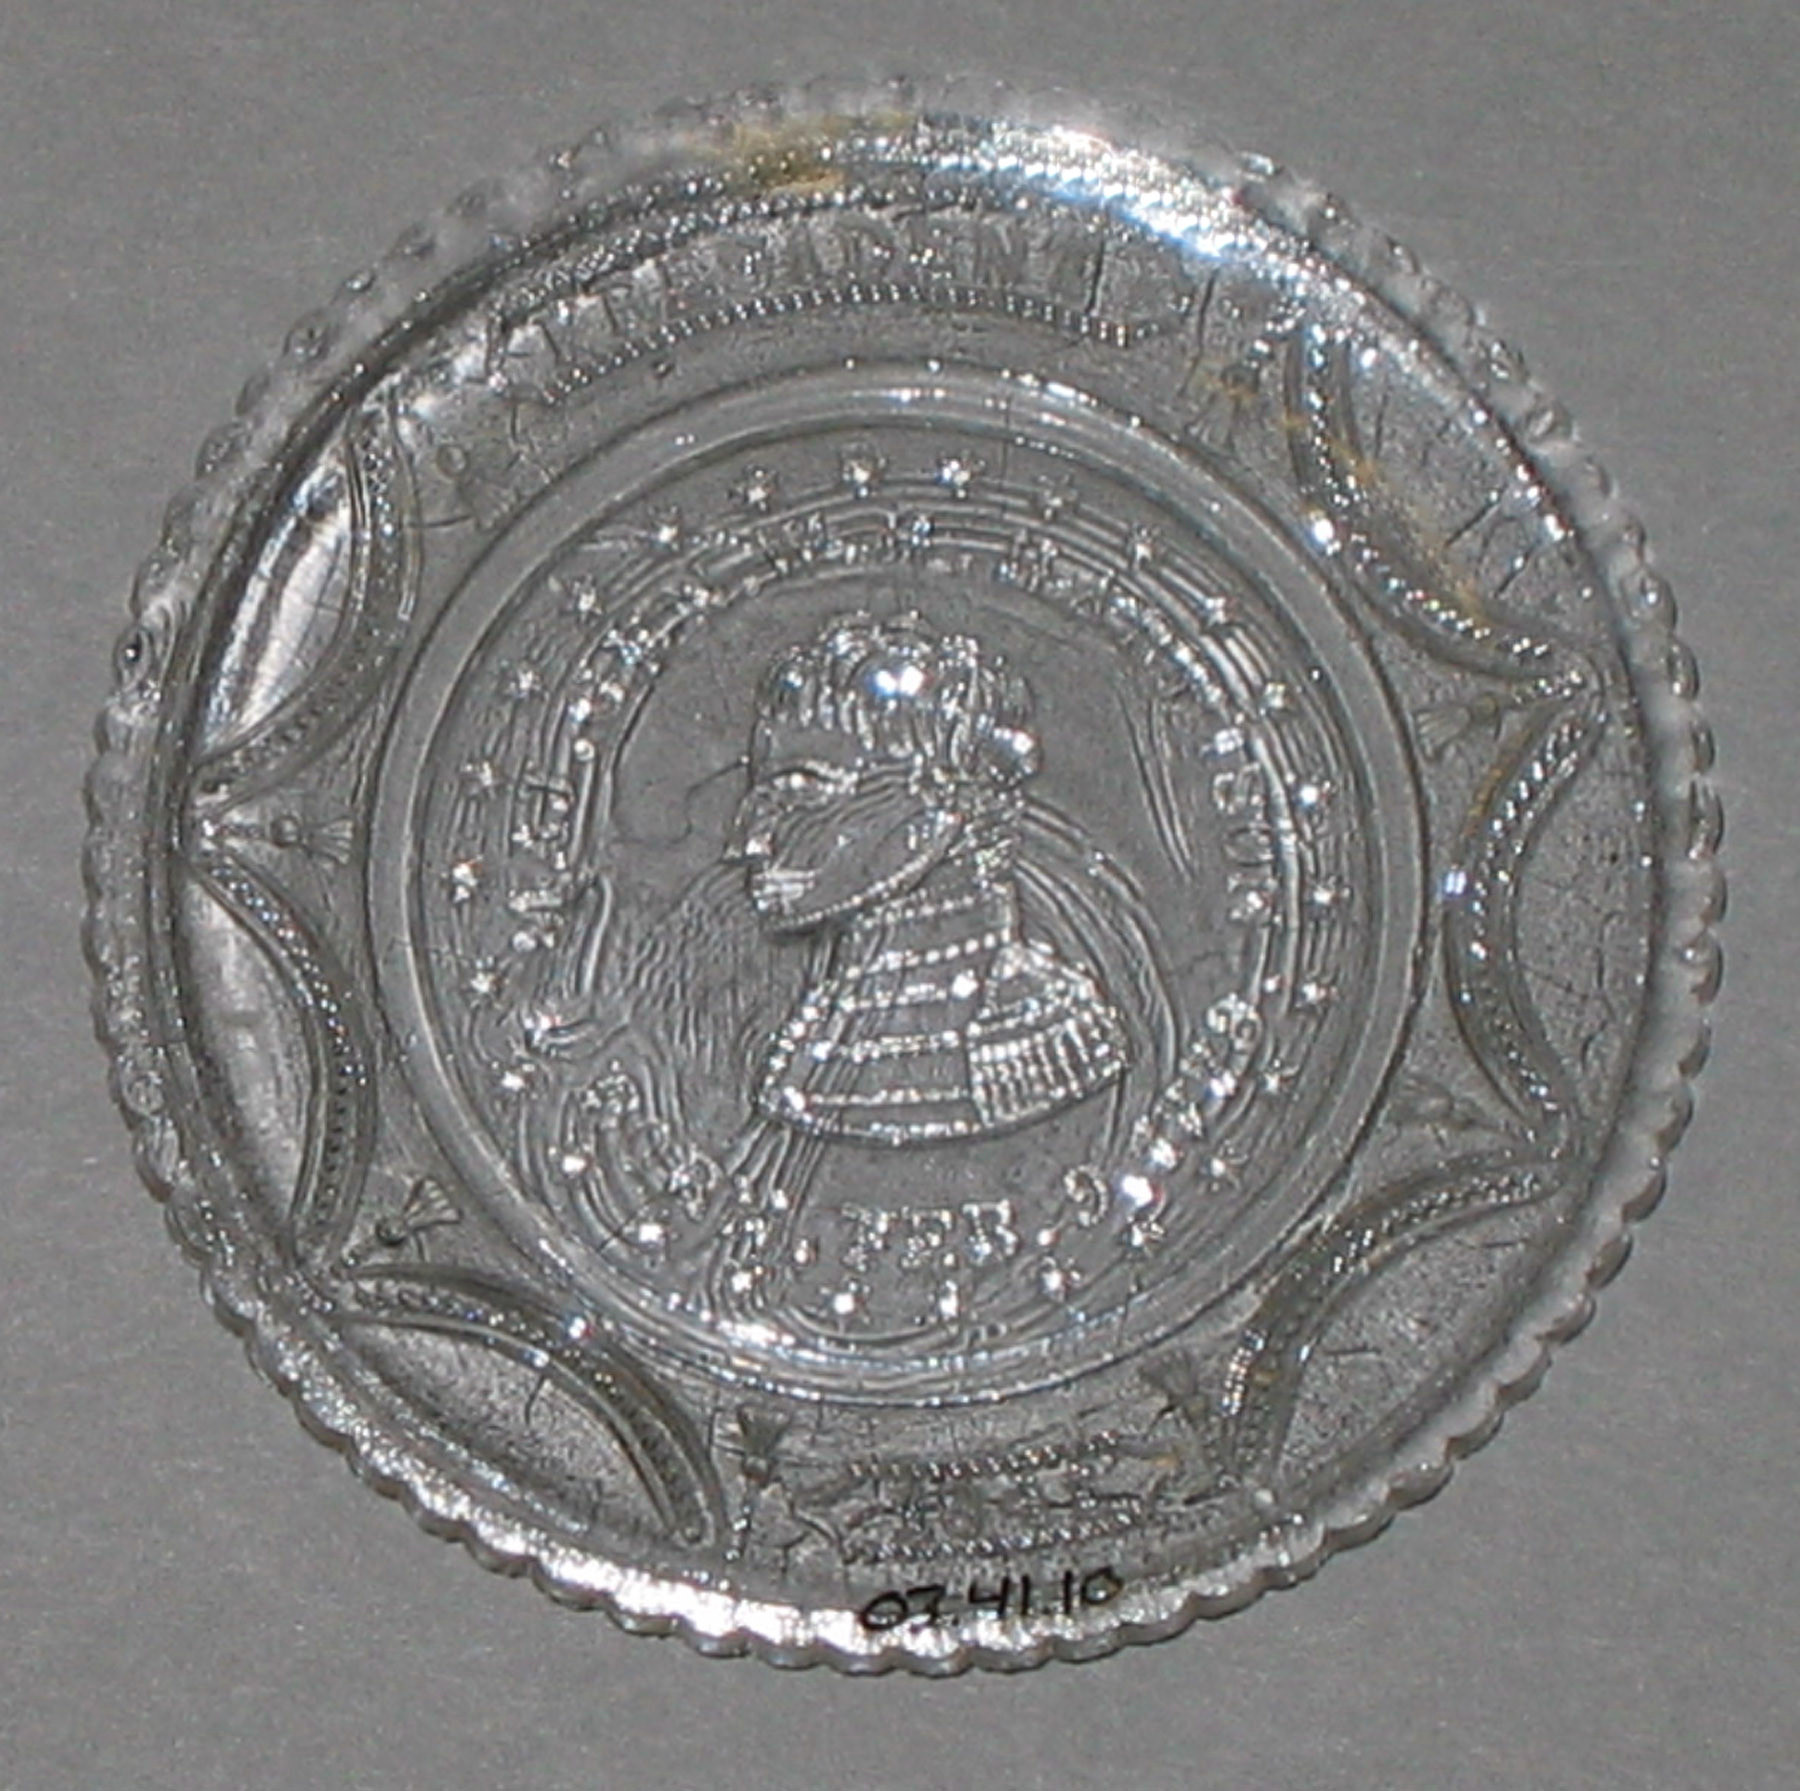 2003.0041.010 Wm Henry Harrison cup plate